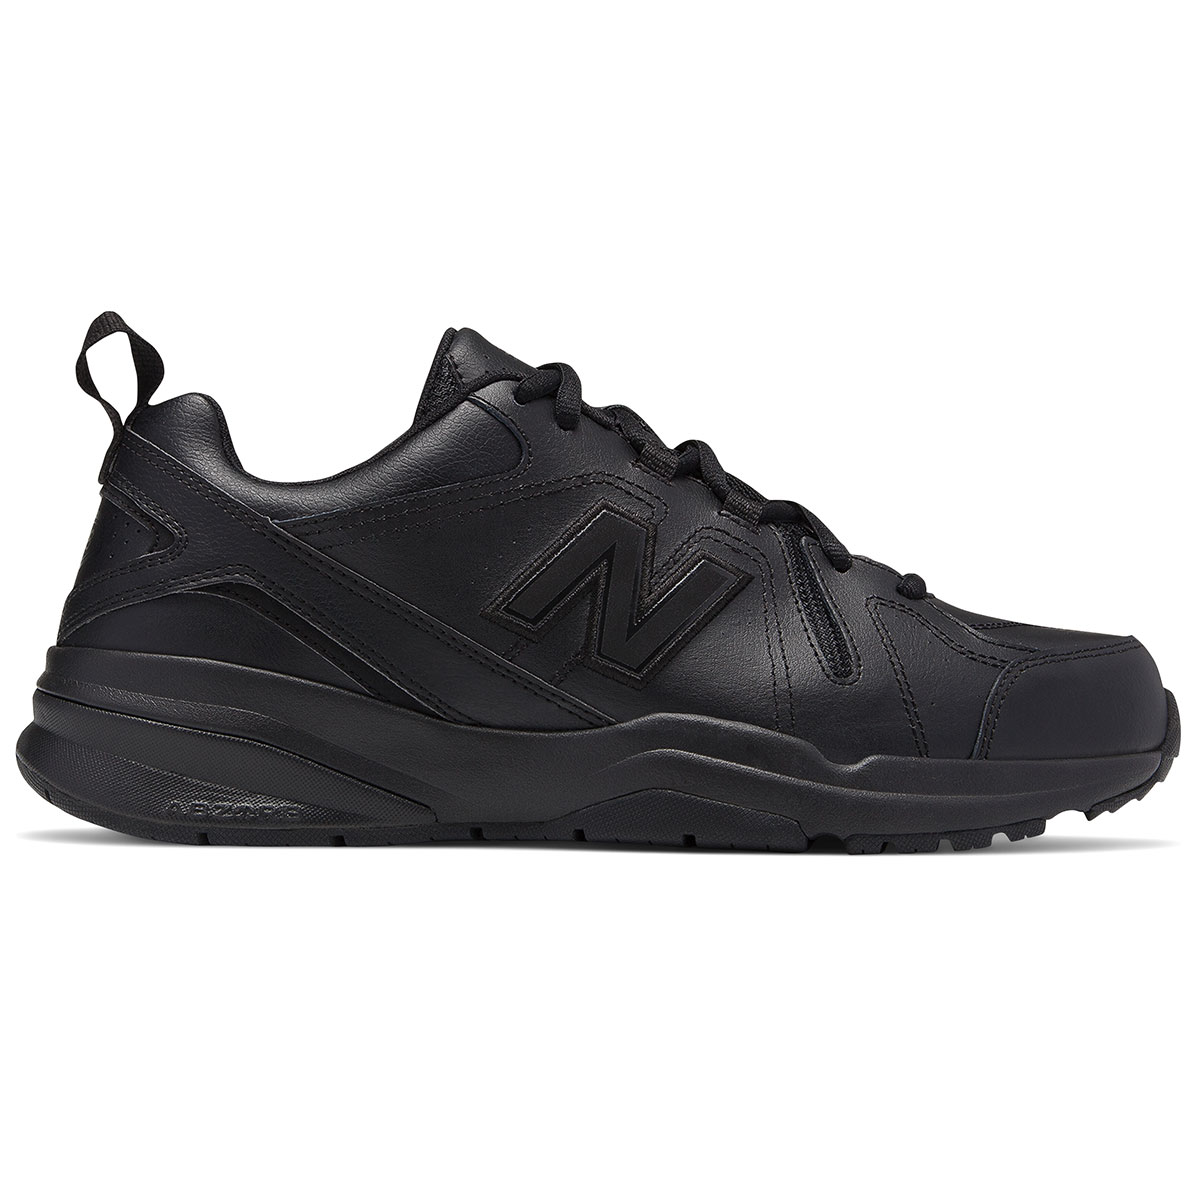 New Balance Men's 608V5 Training Shoes, Extra Wide - Black, 10.5